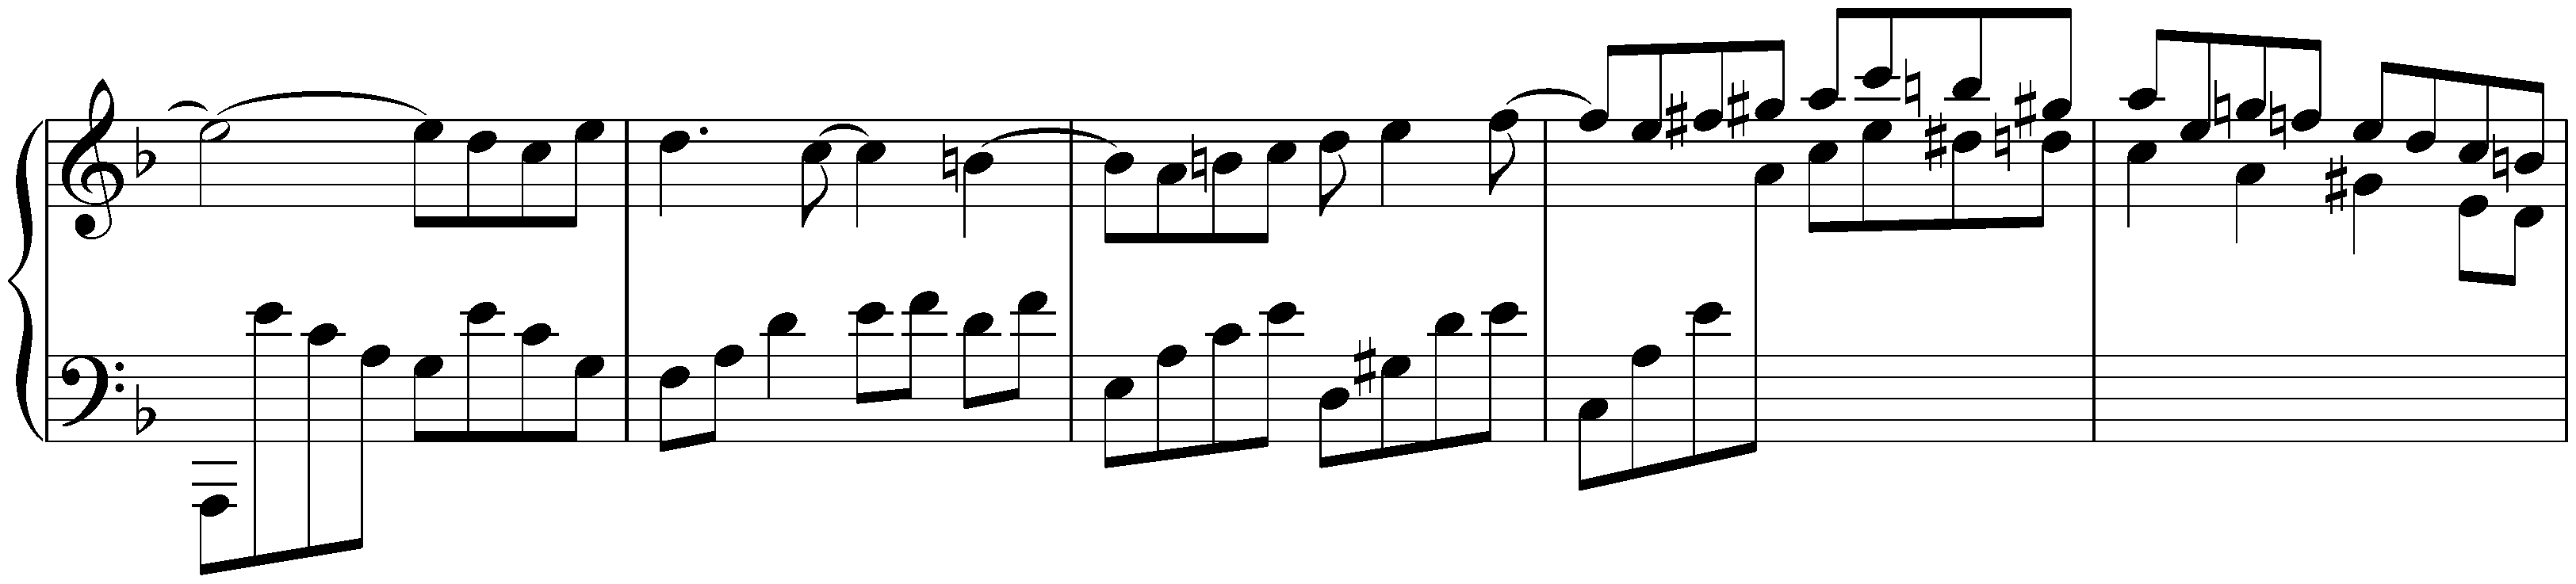 Suite in D minor; 1. Lento – Allegro moderato